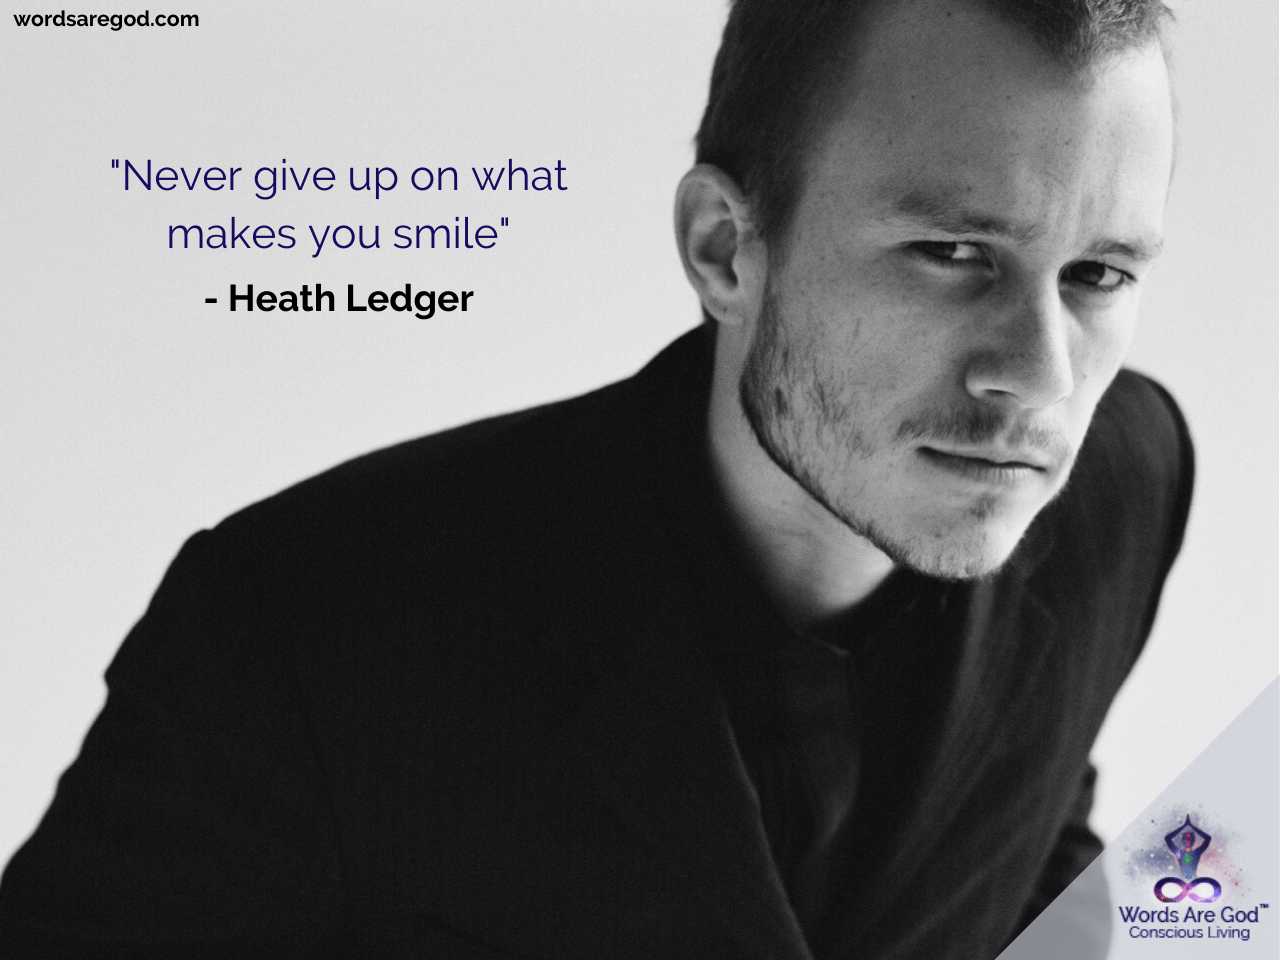 Heath Ledger Inspirational Quotes